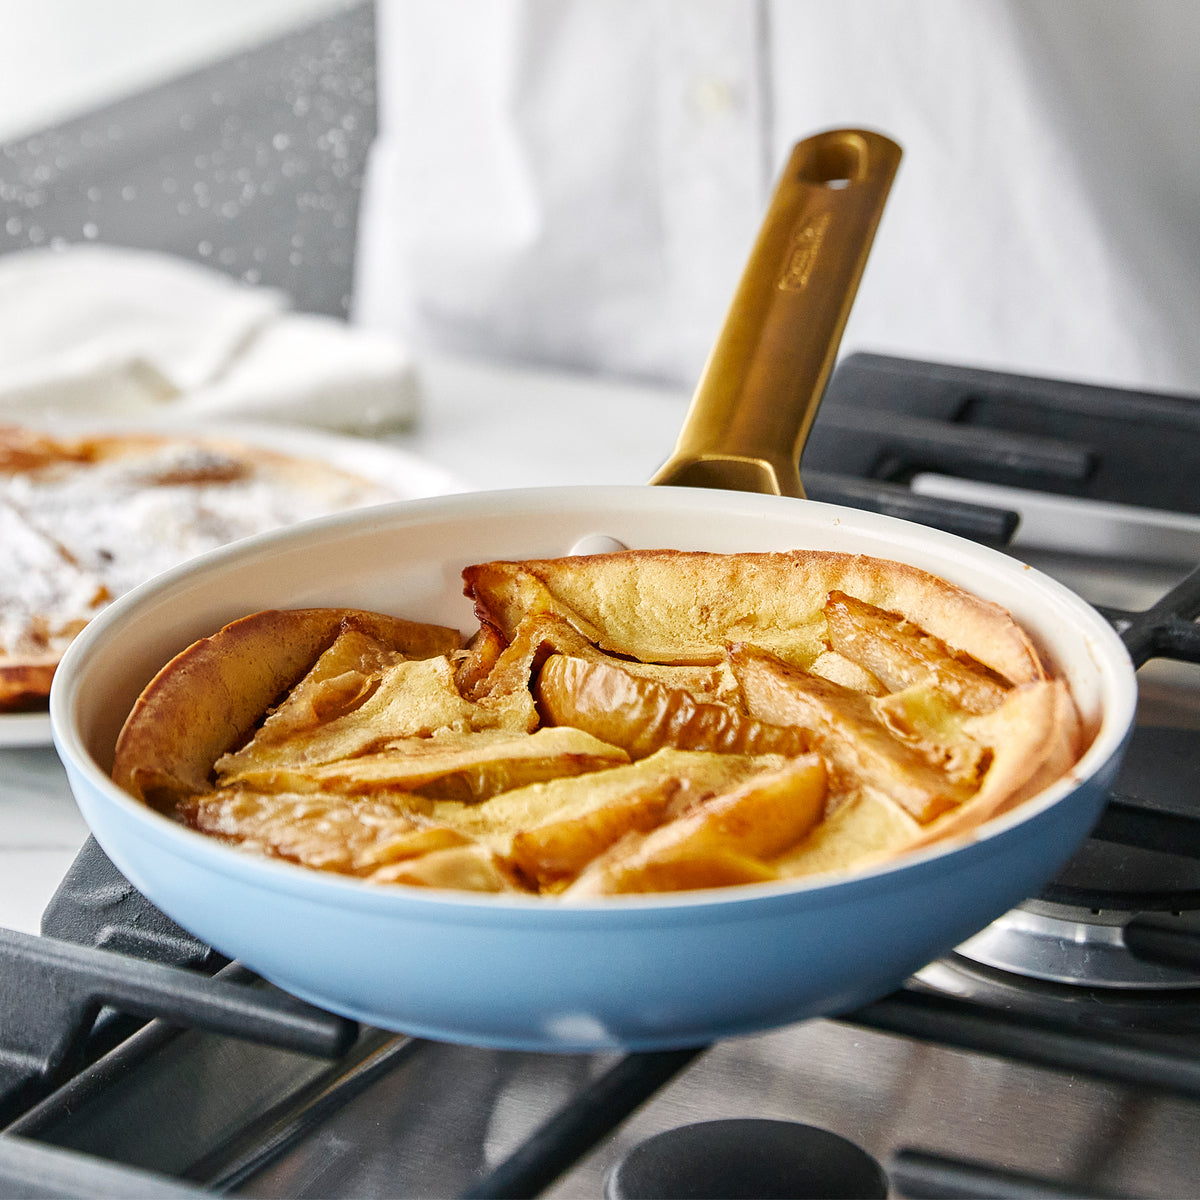 Orange 10-Piece Cookware Set Toxin Free Ceramic Nonstick Pots Pans New